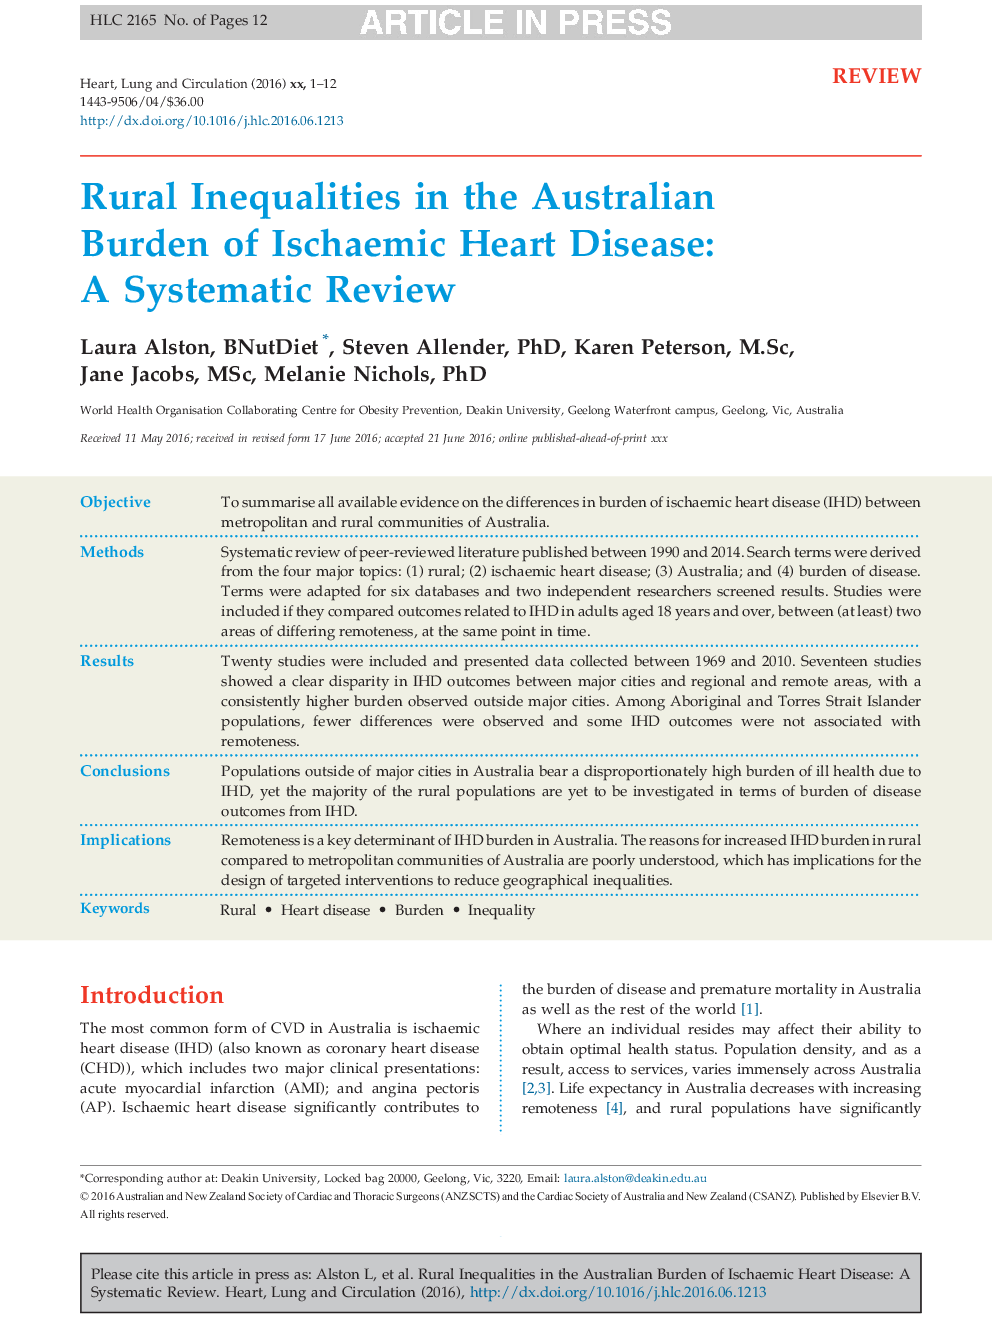 Rural Inequalities in the Australian Burden of Ischaemic Heart Disease: A Systematic Review